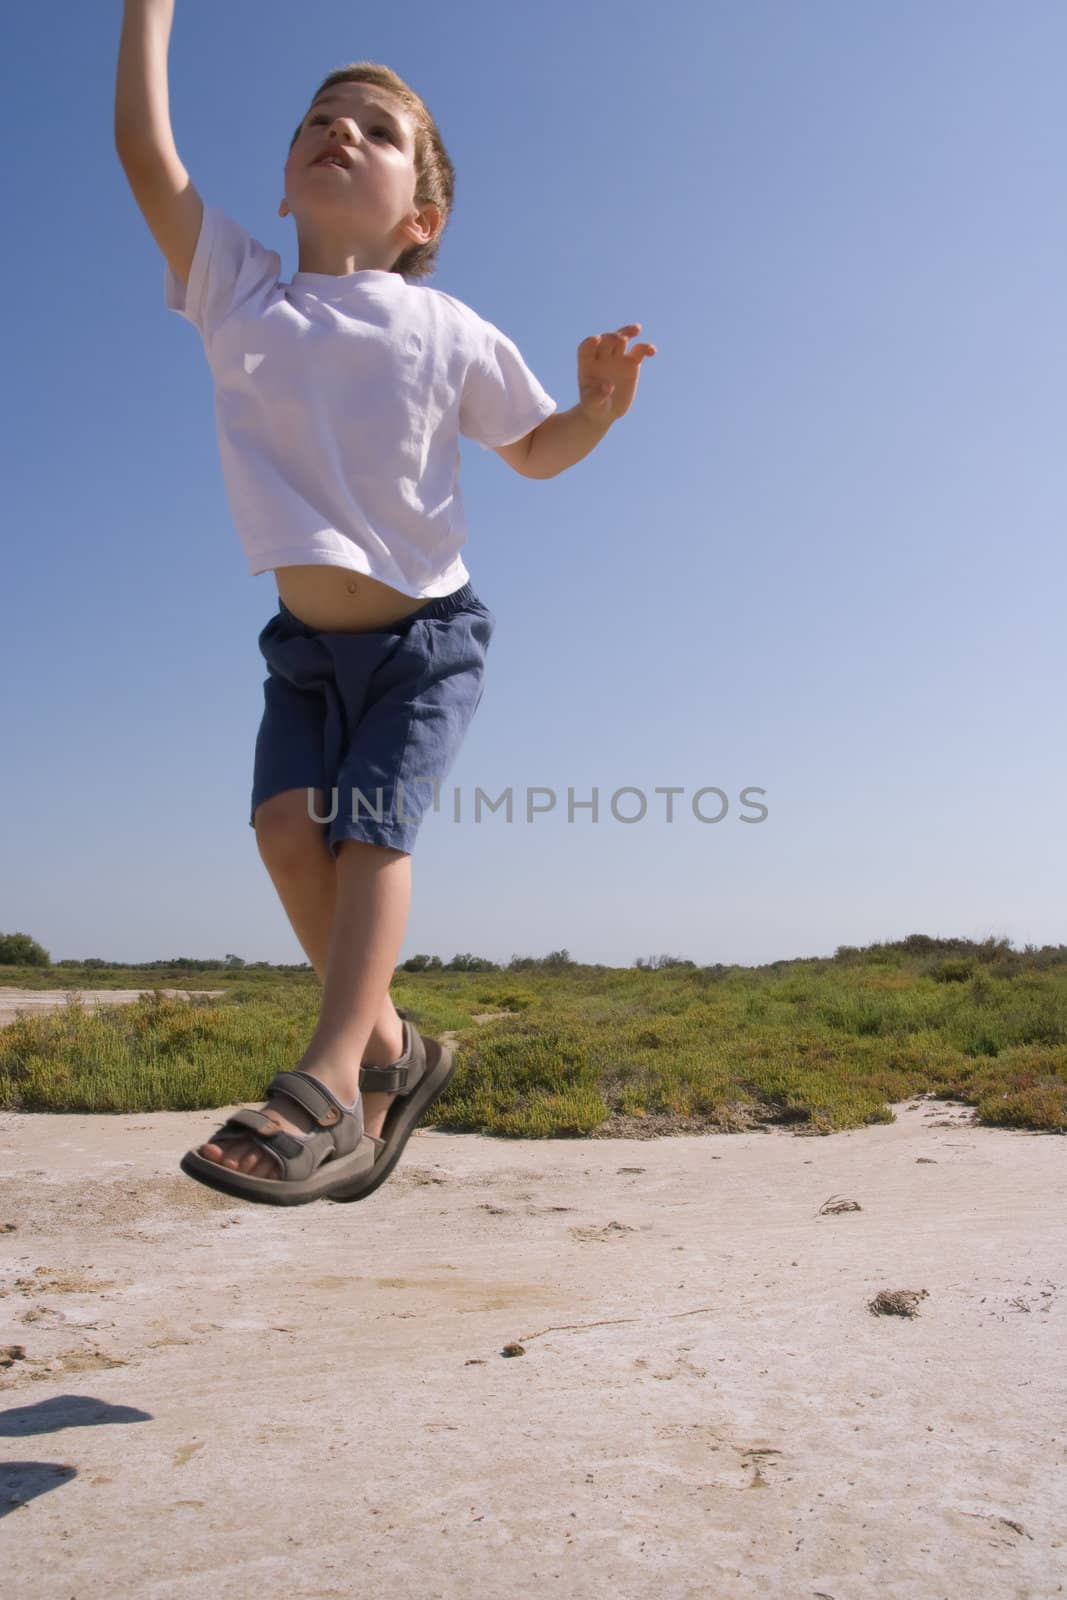 jumping child by chrisroll